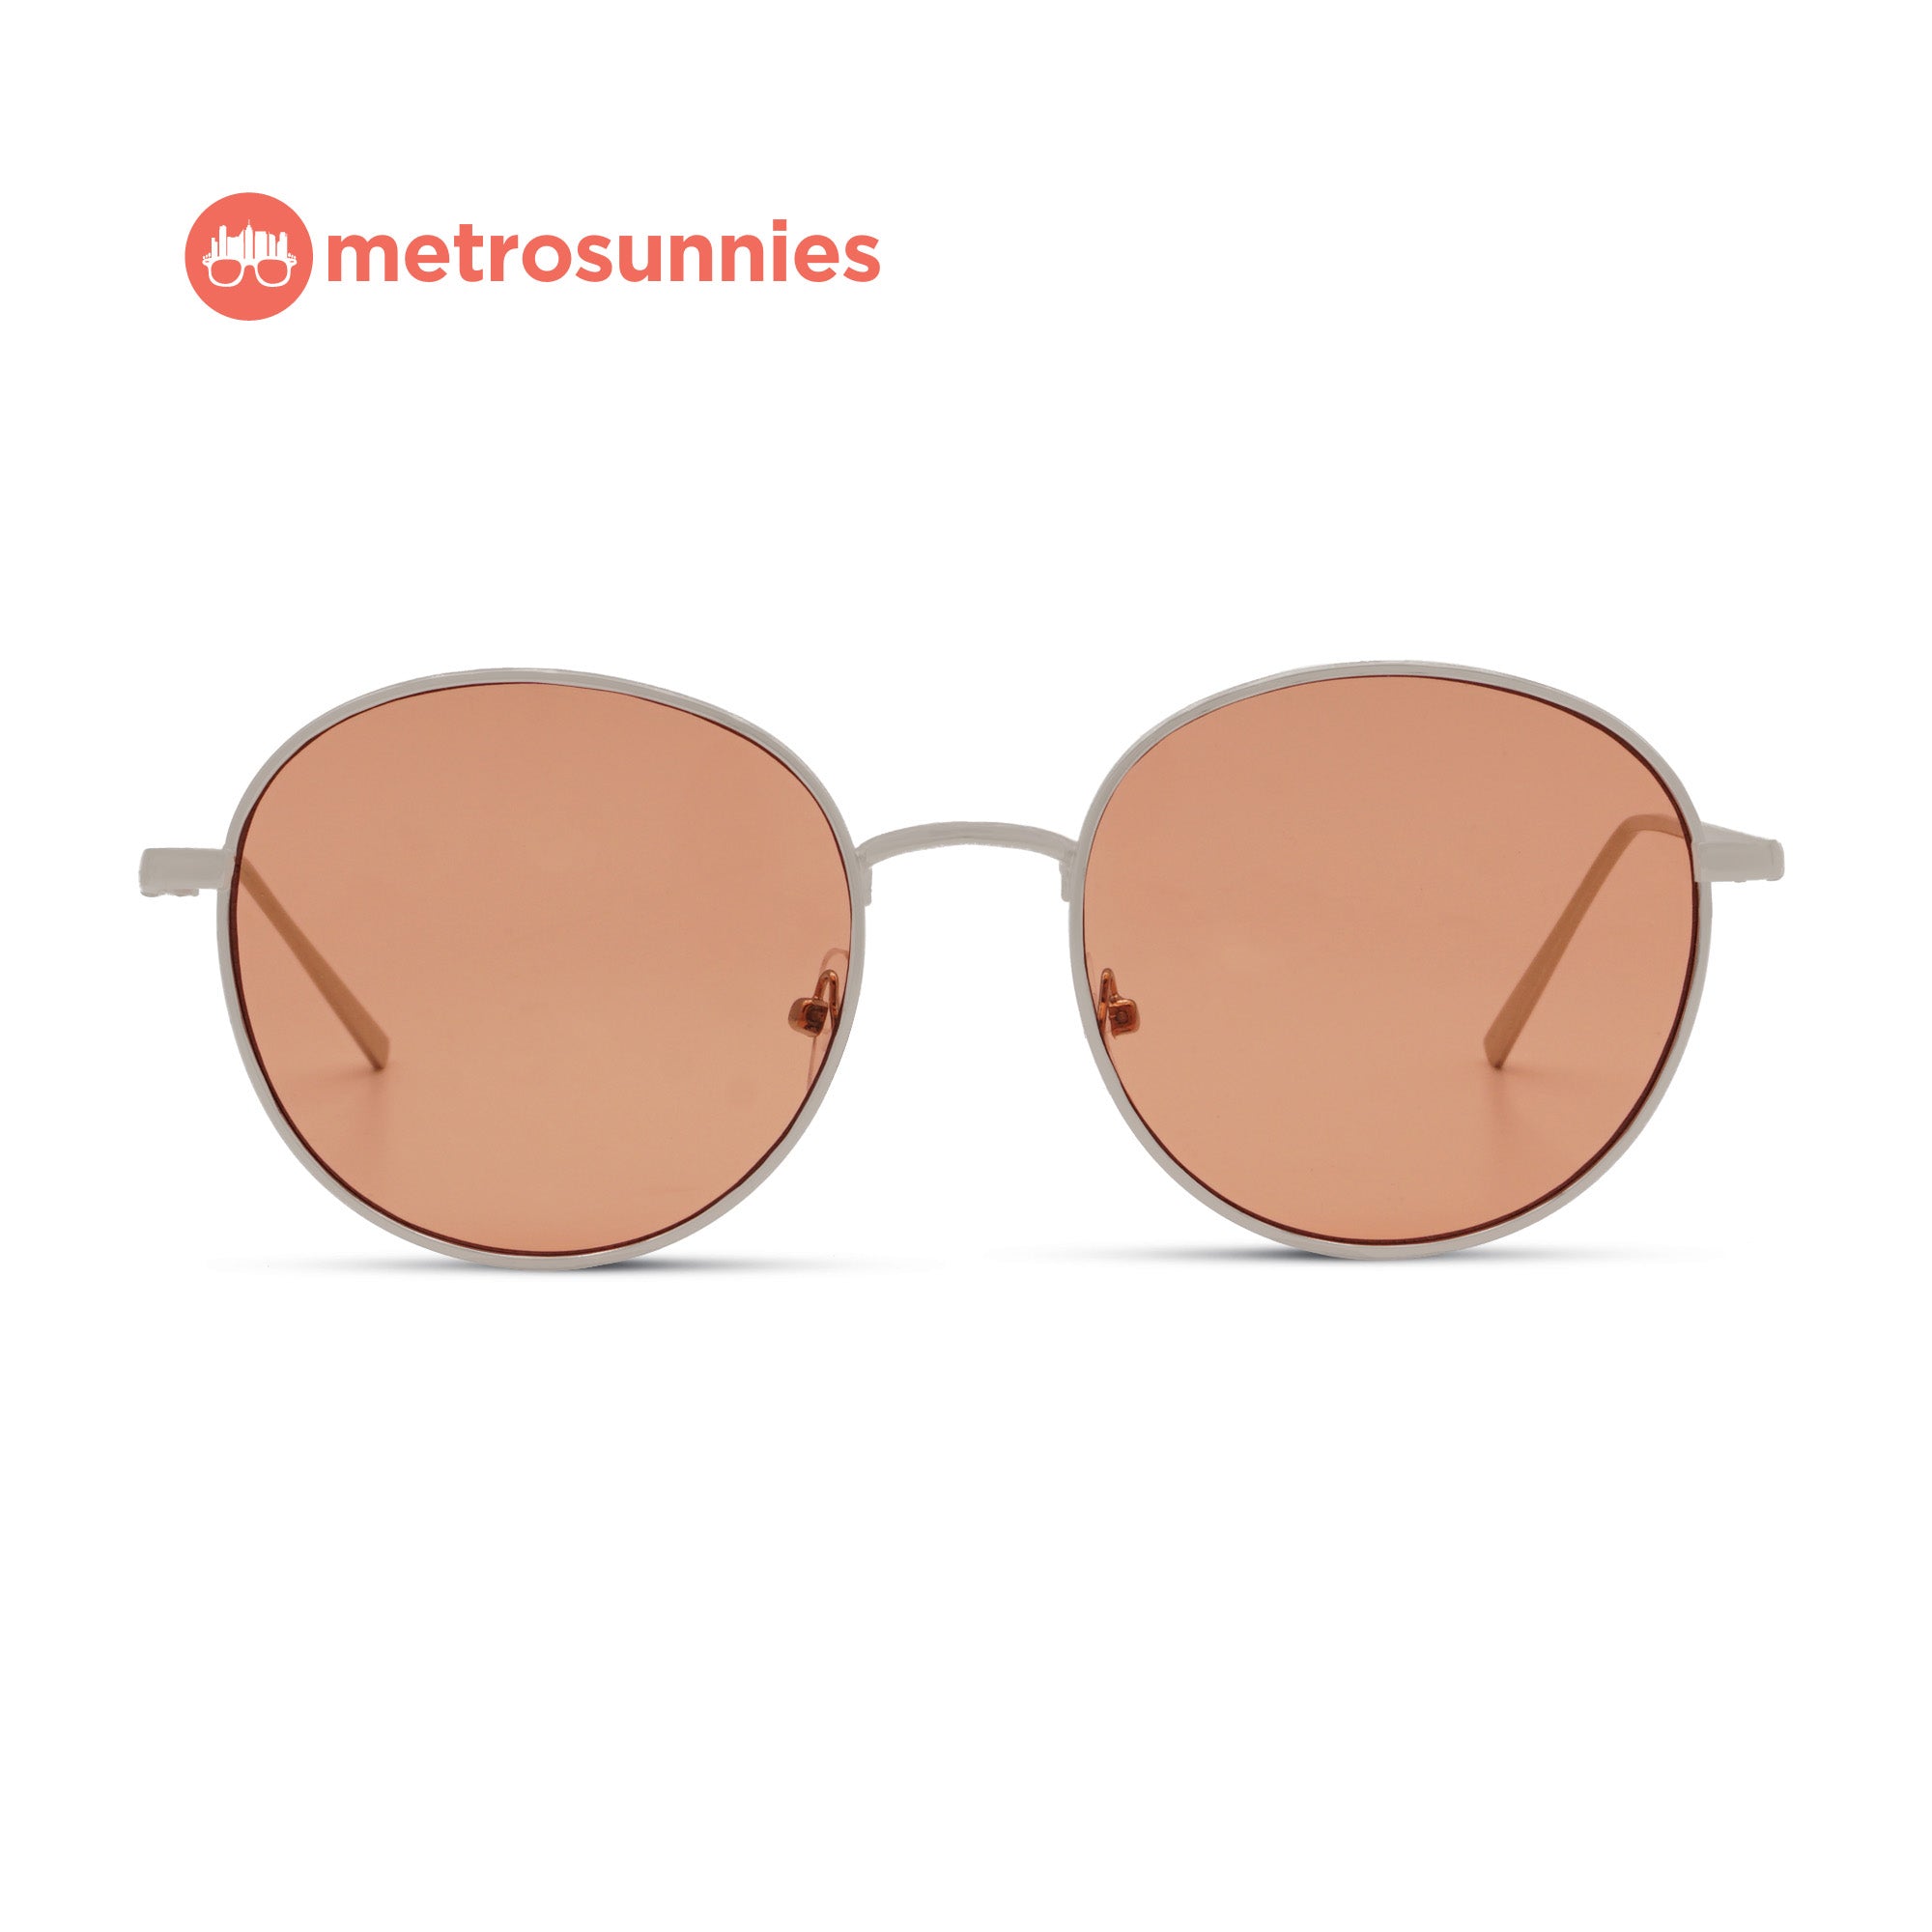 MetroSunnies Frankie Sunnies (Apricot) / Sunglasses with UV400 Protection / Fashion Eyewear Unisex